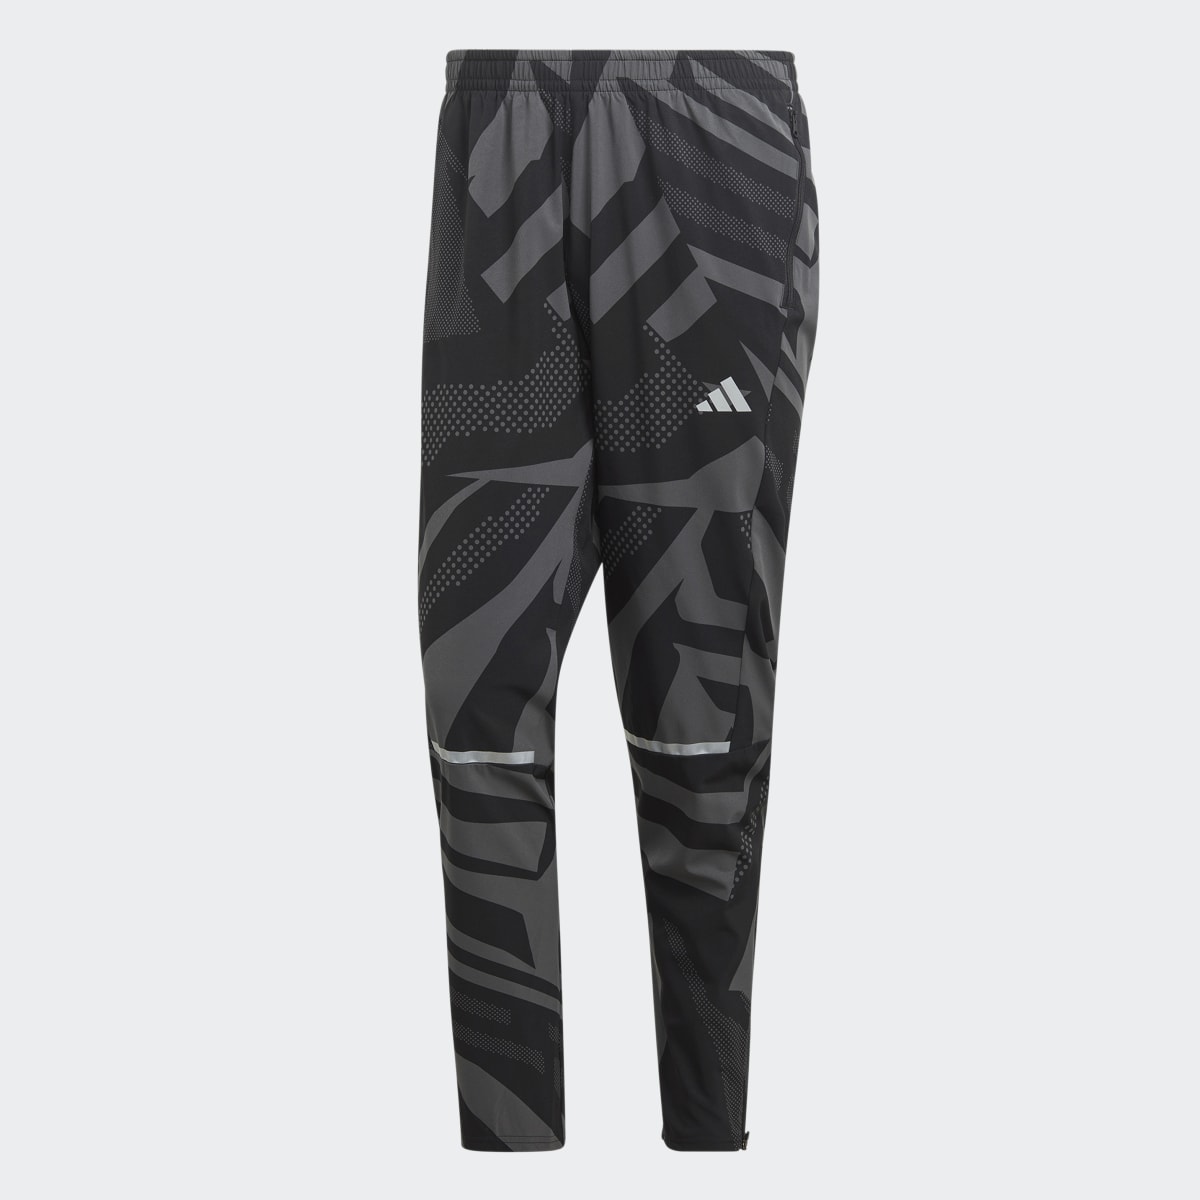 Adidas Own the Run Seasonal Pants. 4